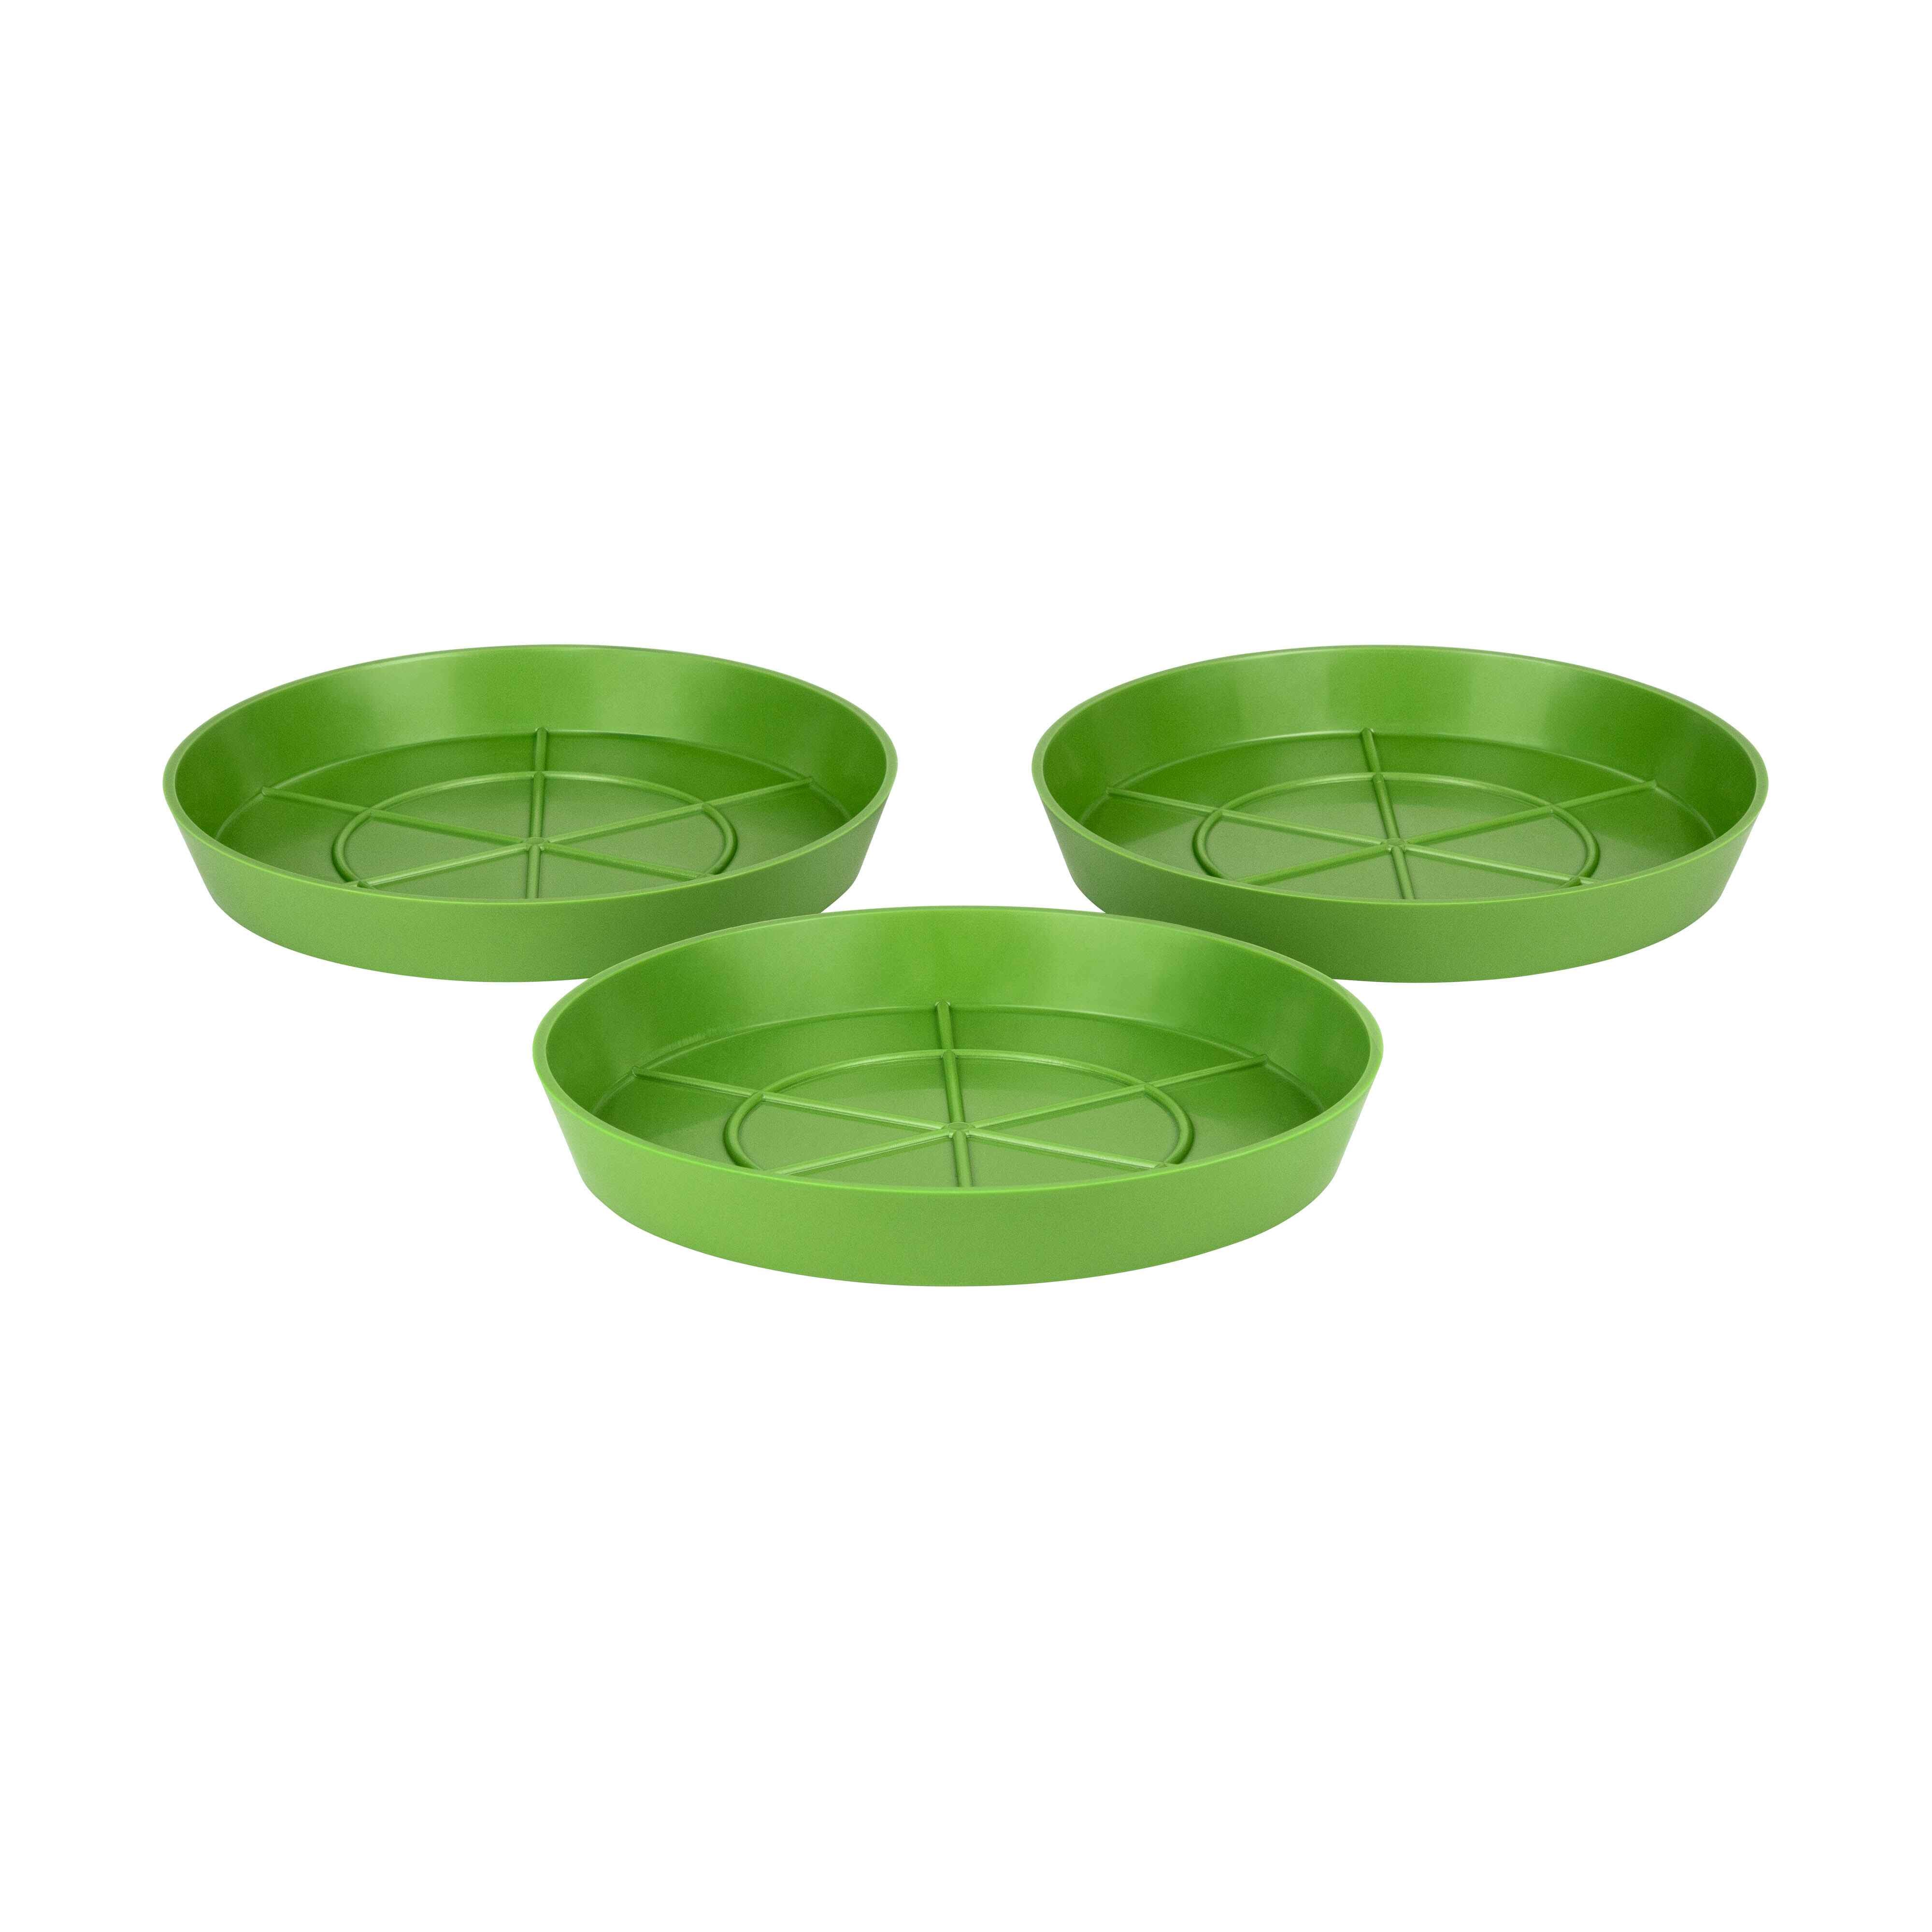 Picture of 3 19cm Green Saucers for Indoor/Outdoor Plants Pots 